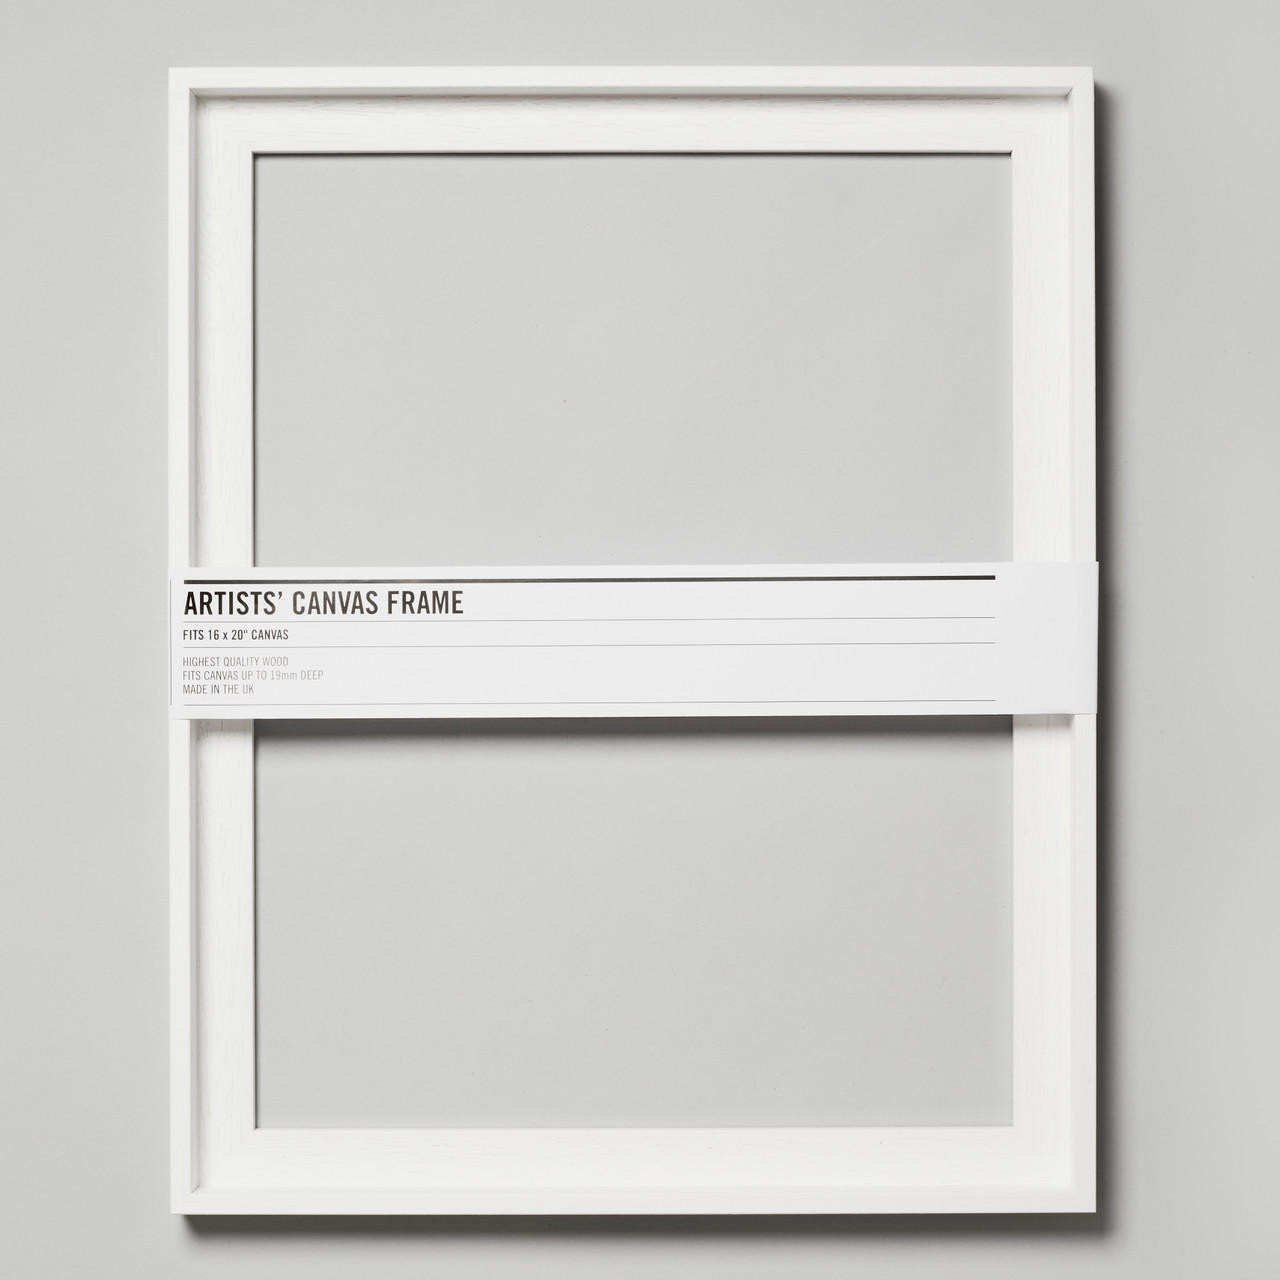 Cass Art Canvas Frame 20 x 16 inches White